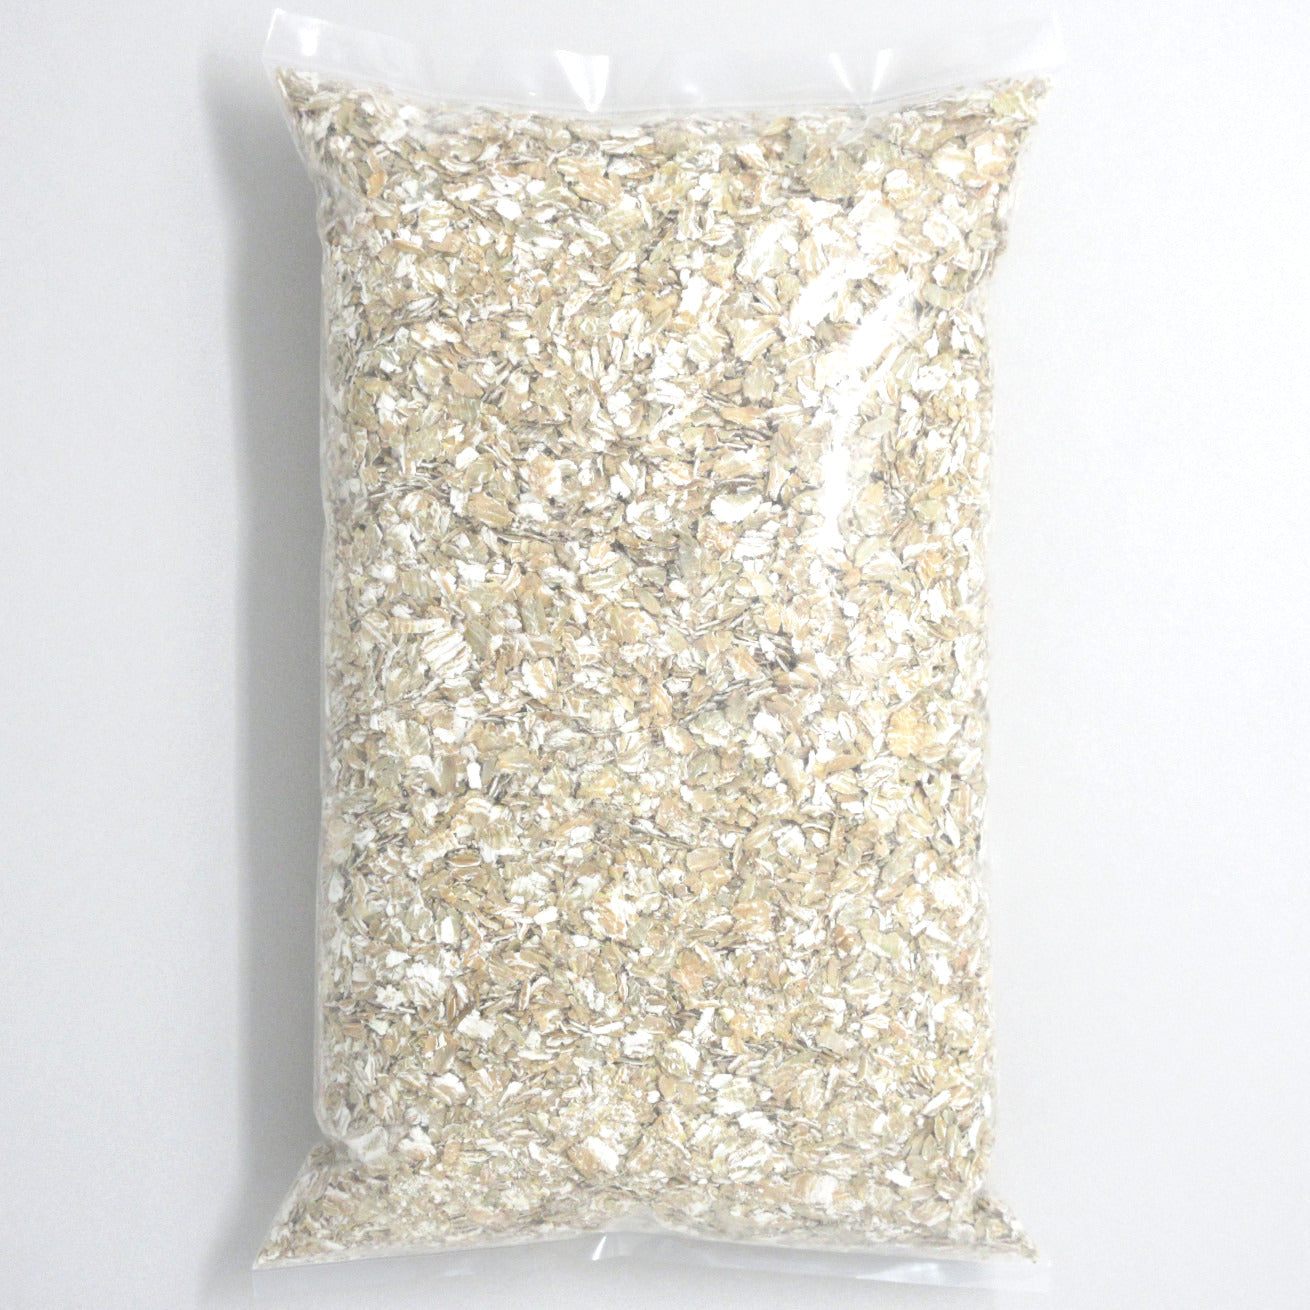 Flour Barrel product image - Rye Flakes